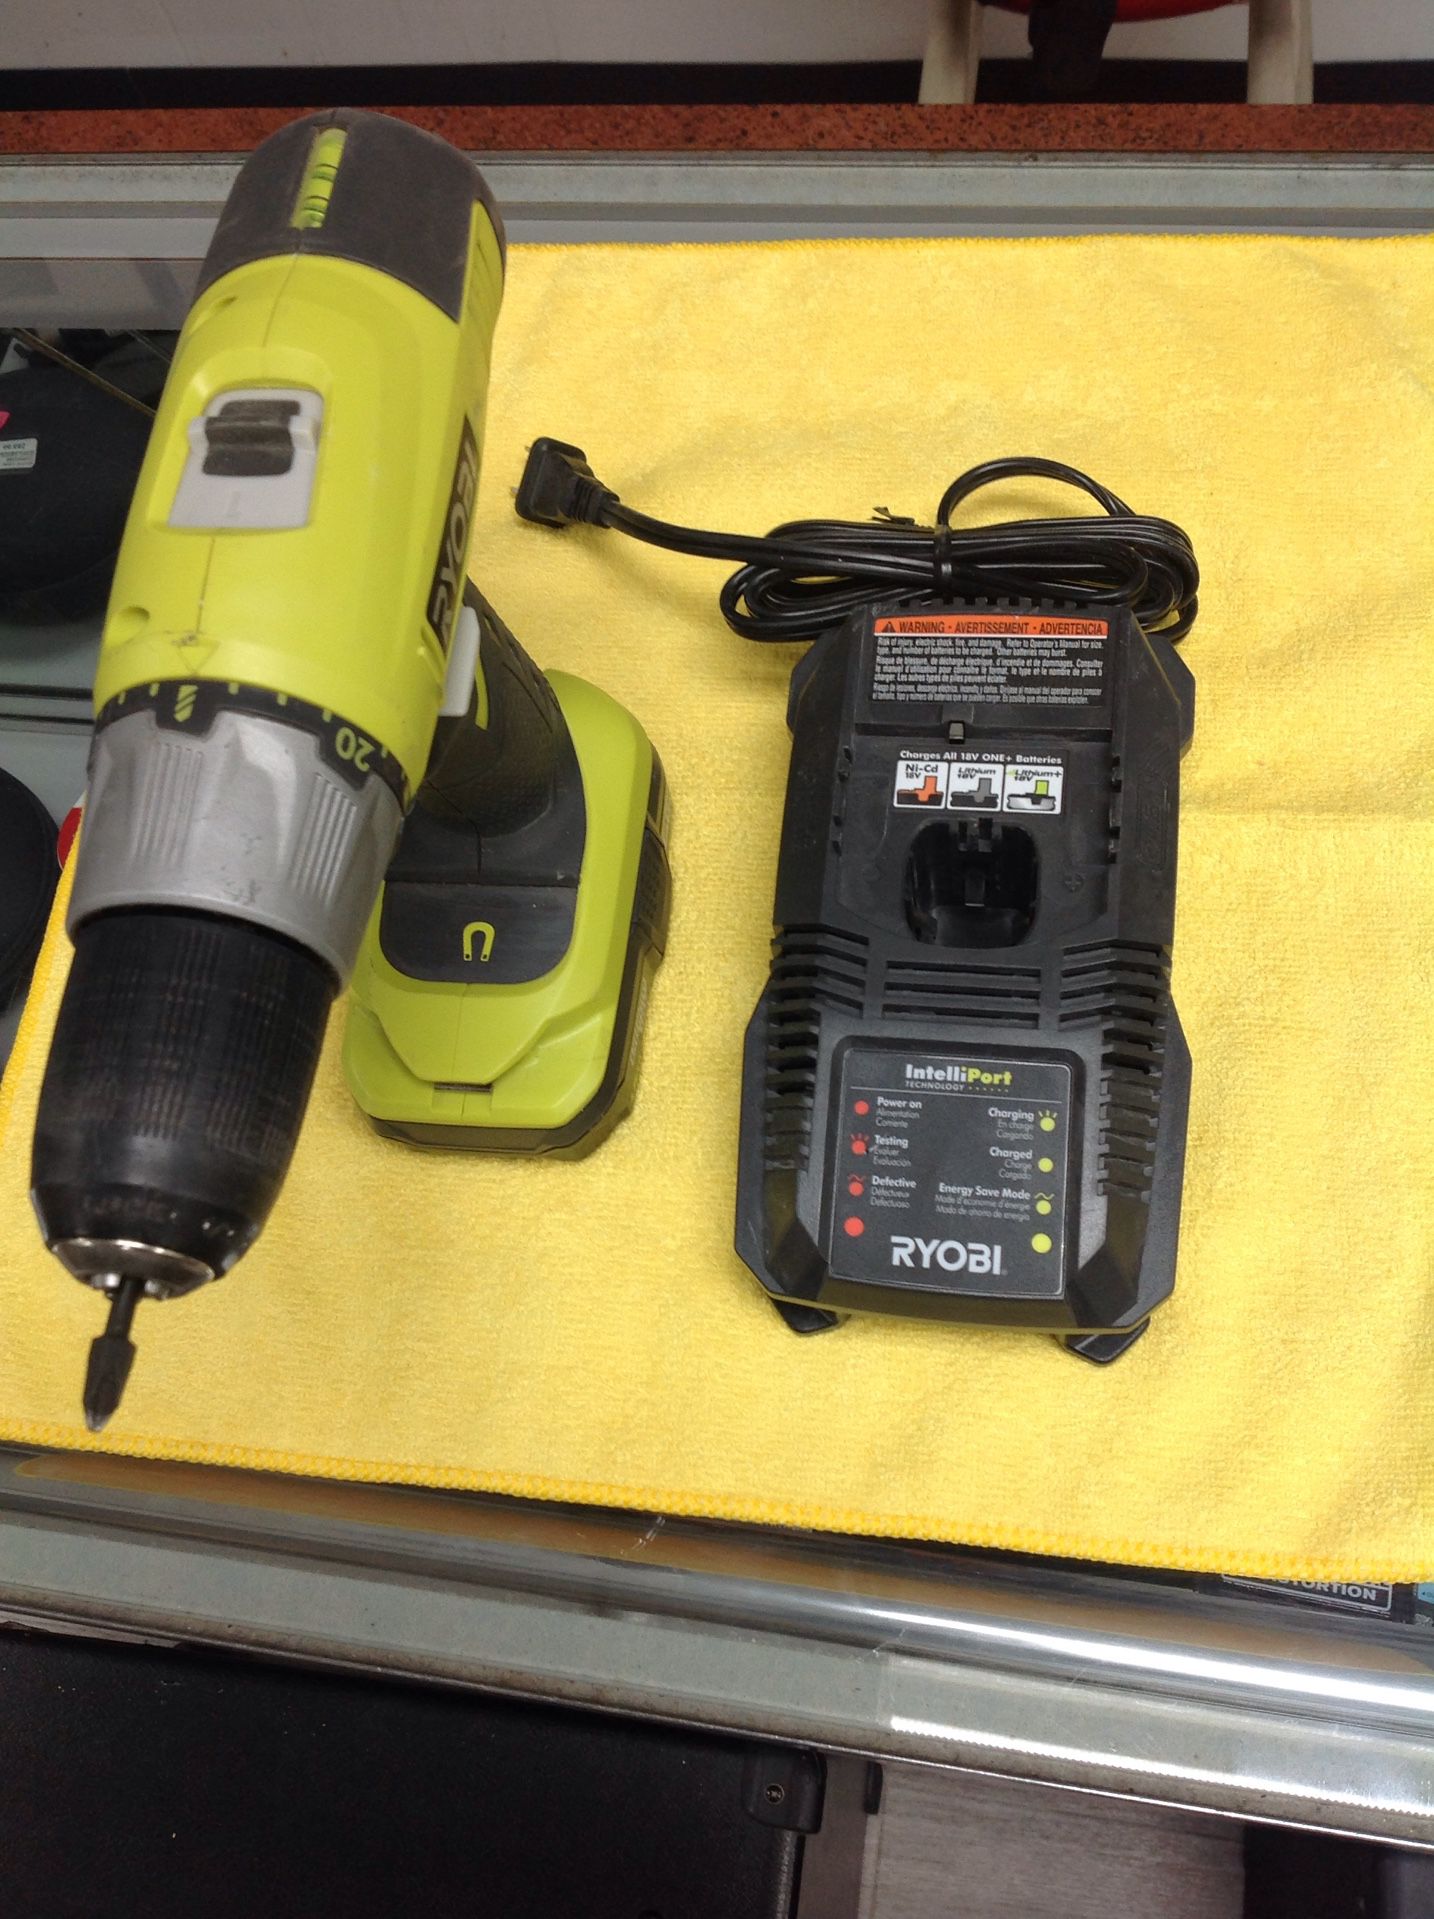 Ryobi p271 1/2" 18v li-ion drill kit with battery &charger